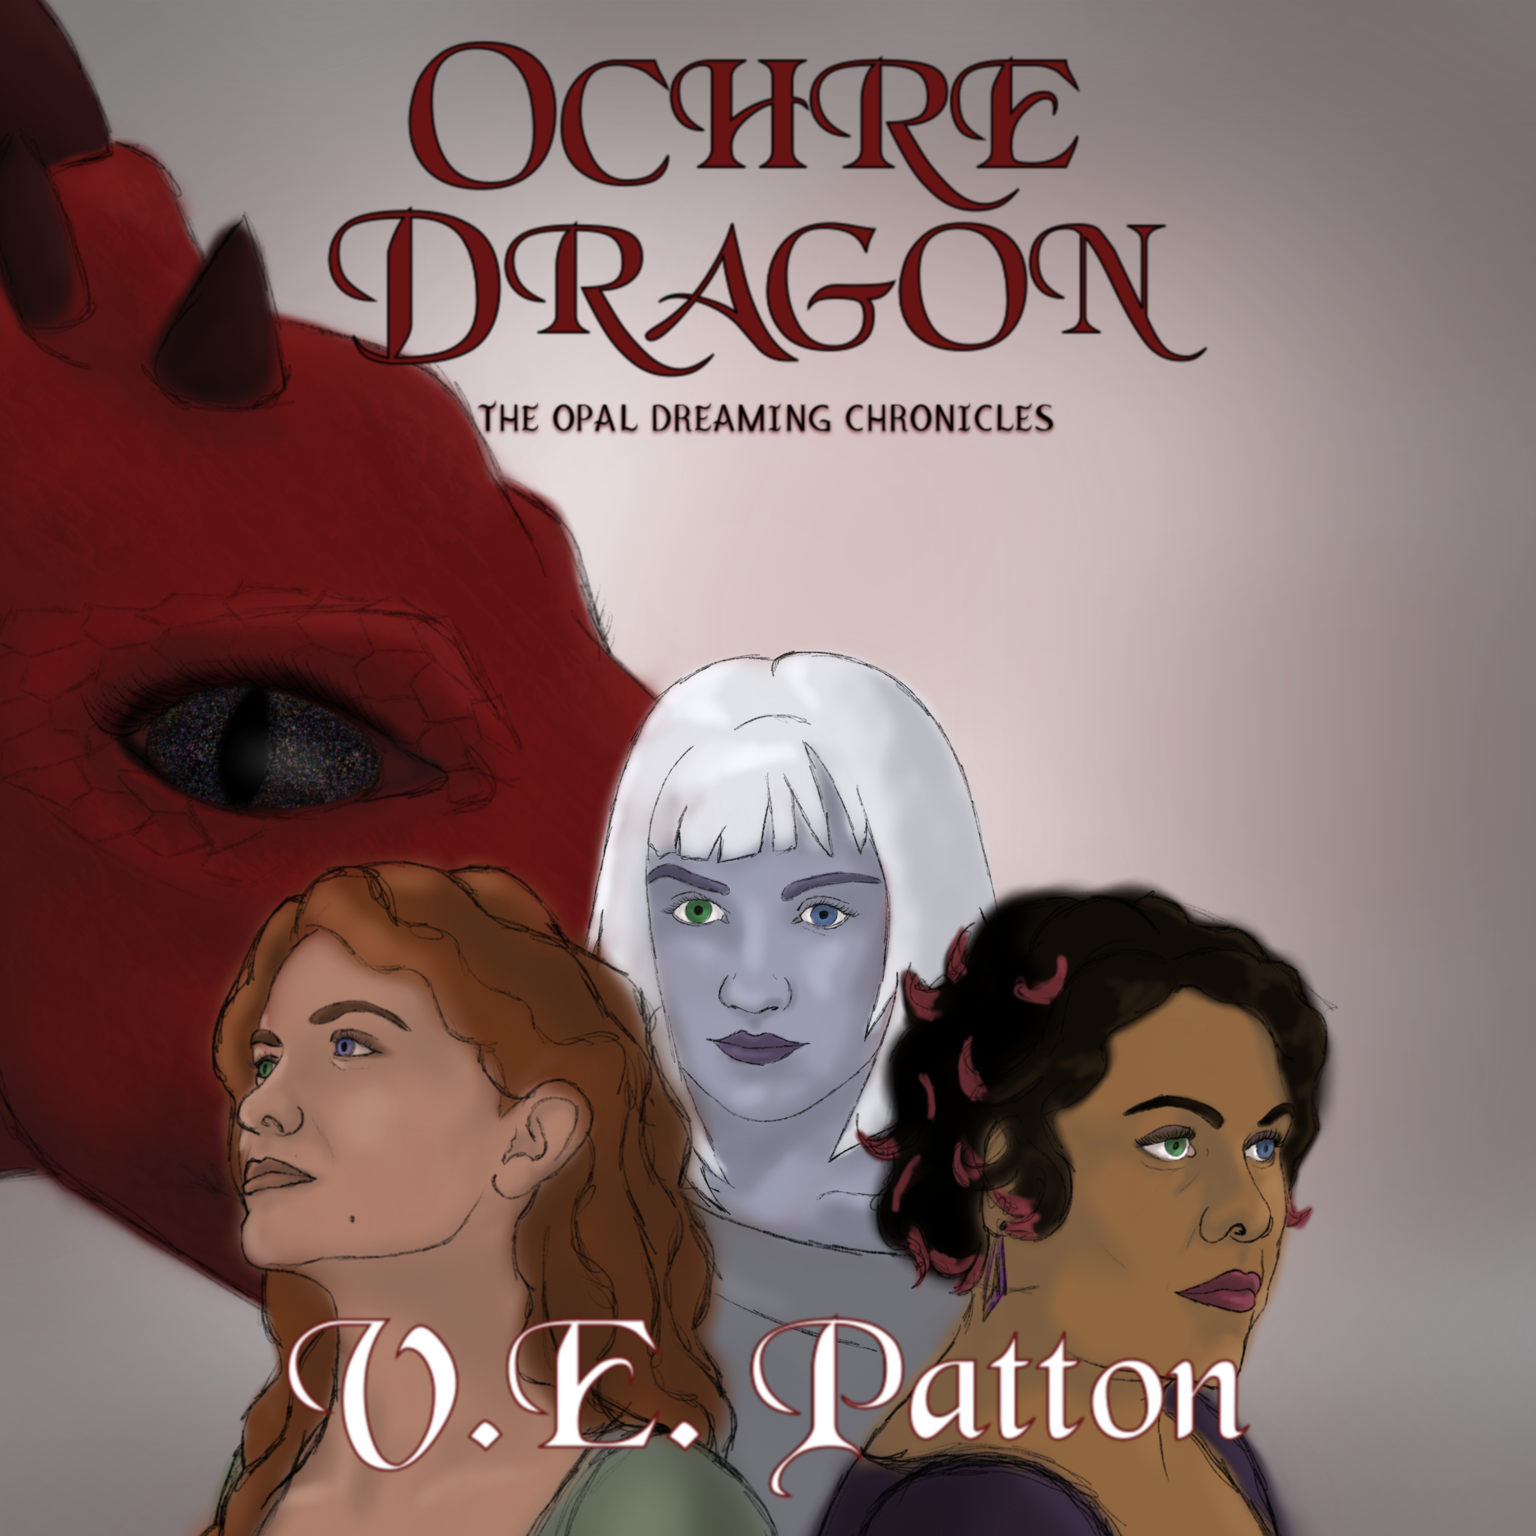 Dragon and three women